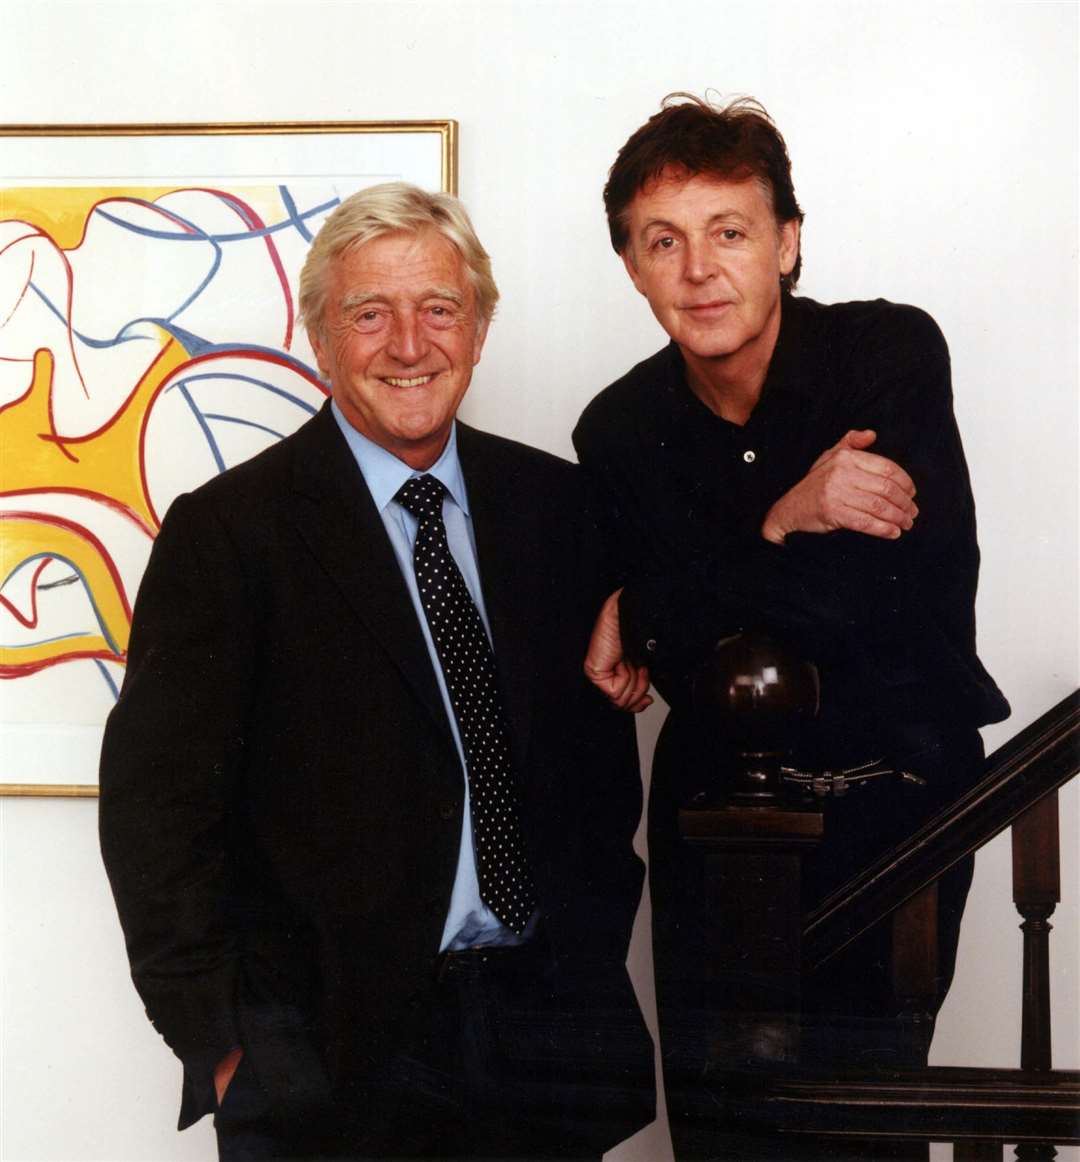 Sir Paul McCartney appeared on Parkinson in 1999 (Richard Haugton/PA)